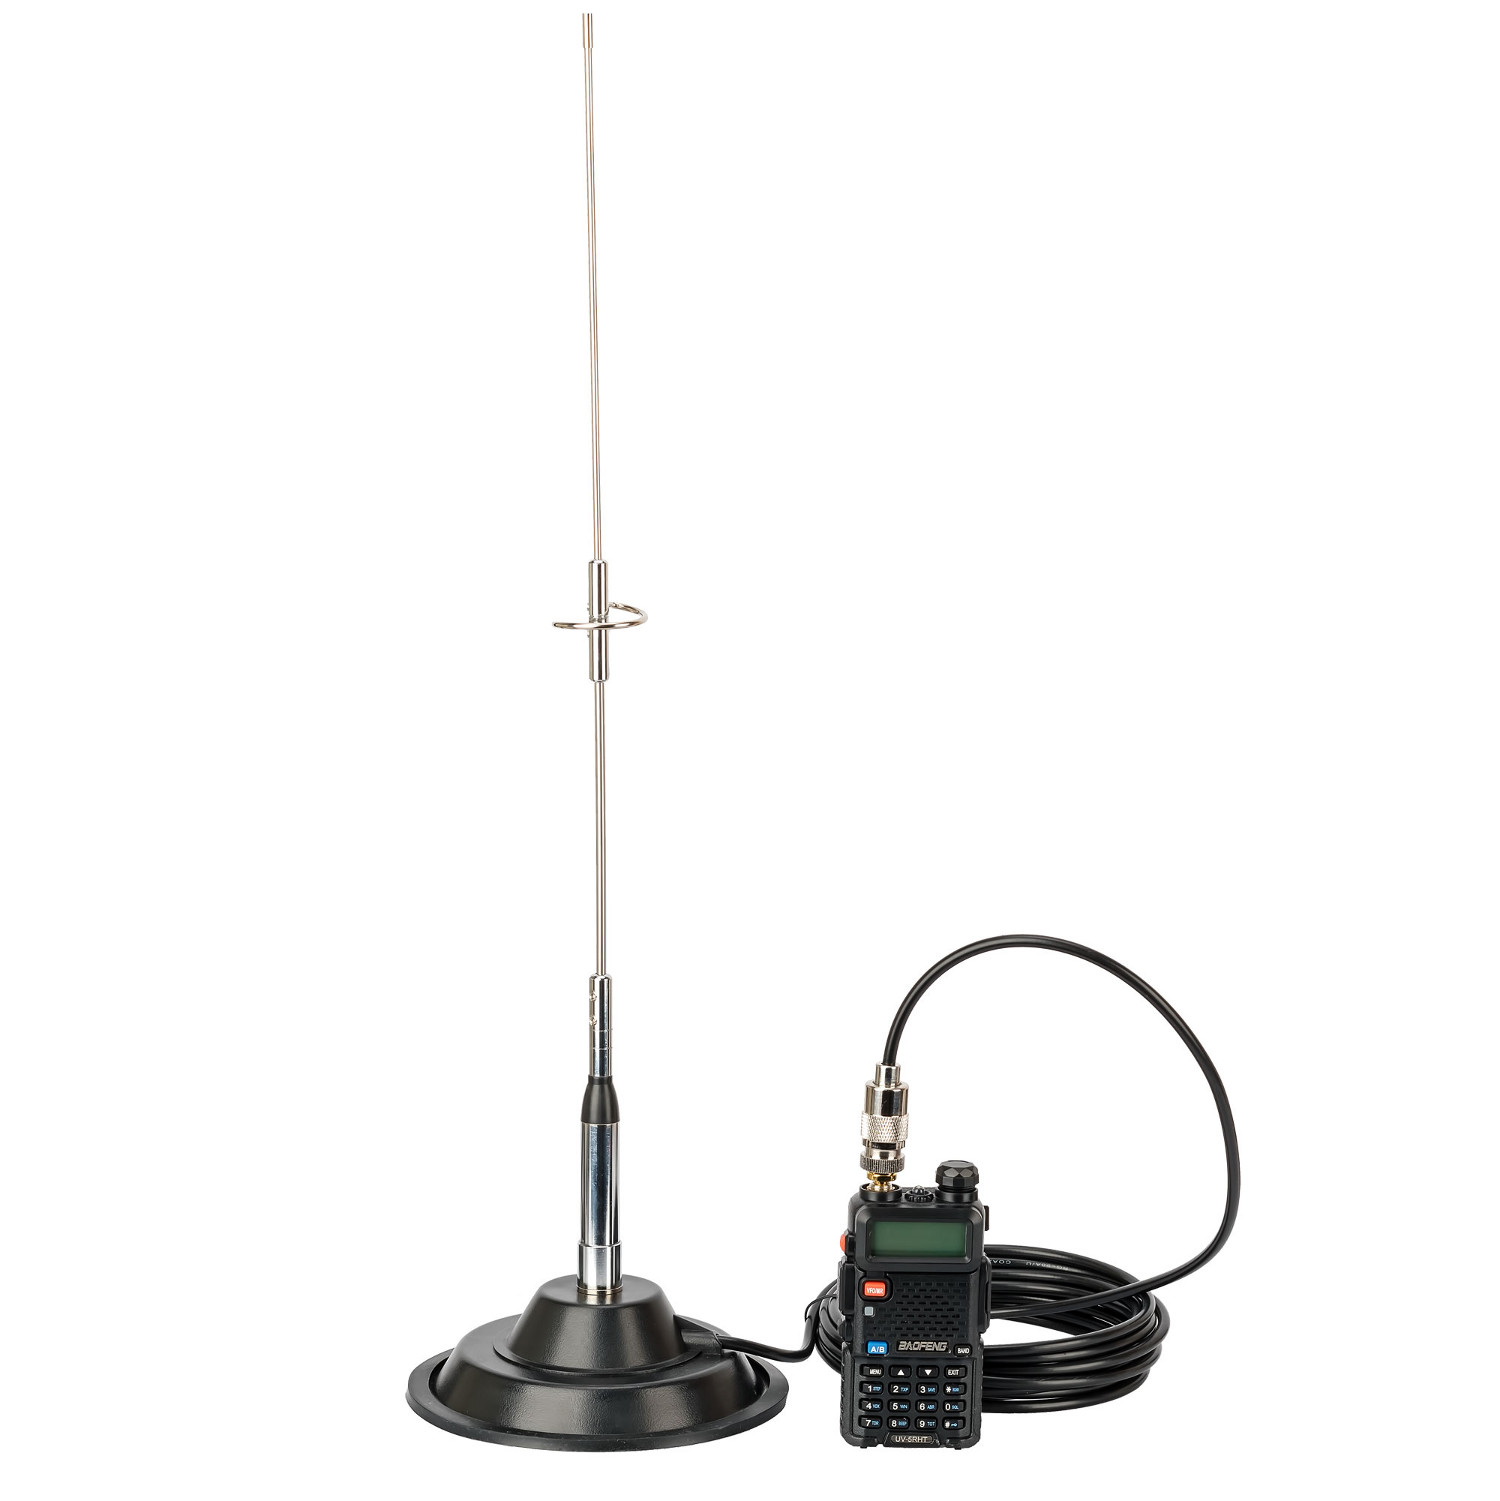 RADIORA NR-770-S MAG adapterem Baofeng UV-5R, UV-82 - antena na magnesie VHF/UHF długość 50cm typ PL, kabel 4m :: KONEKTOR5000.PL radiokomunikacja / akcesoria motoryzacyjne